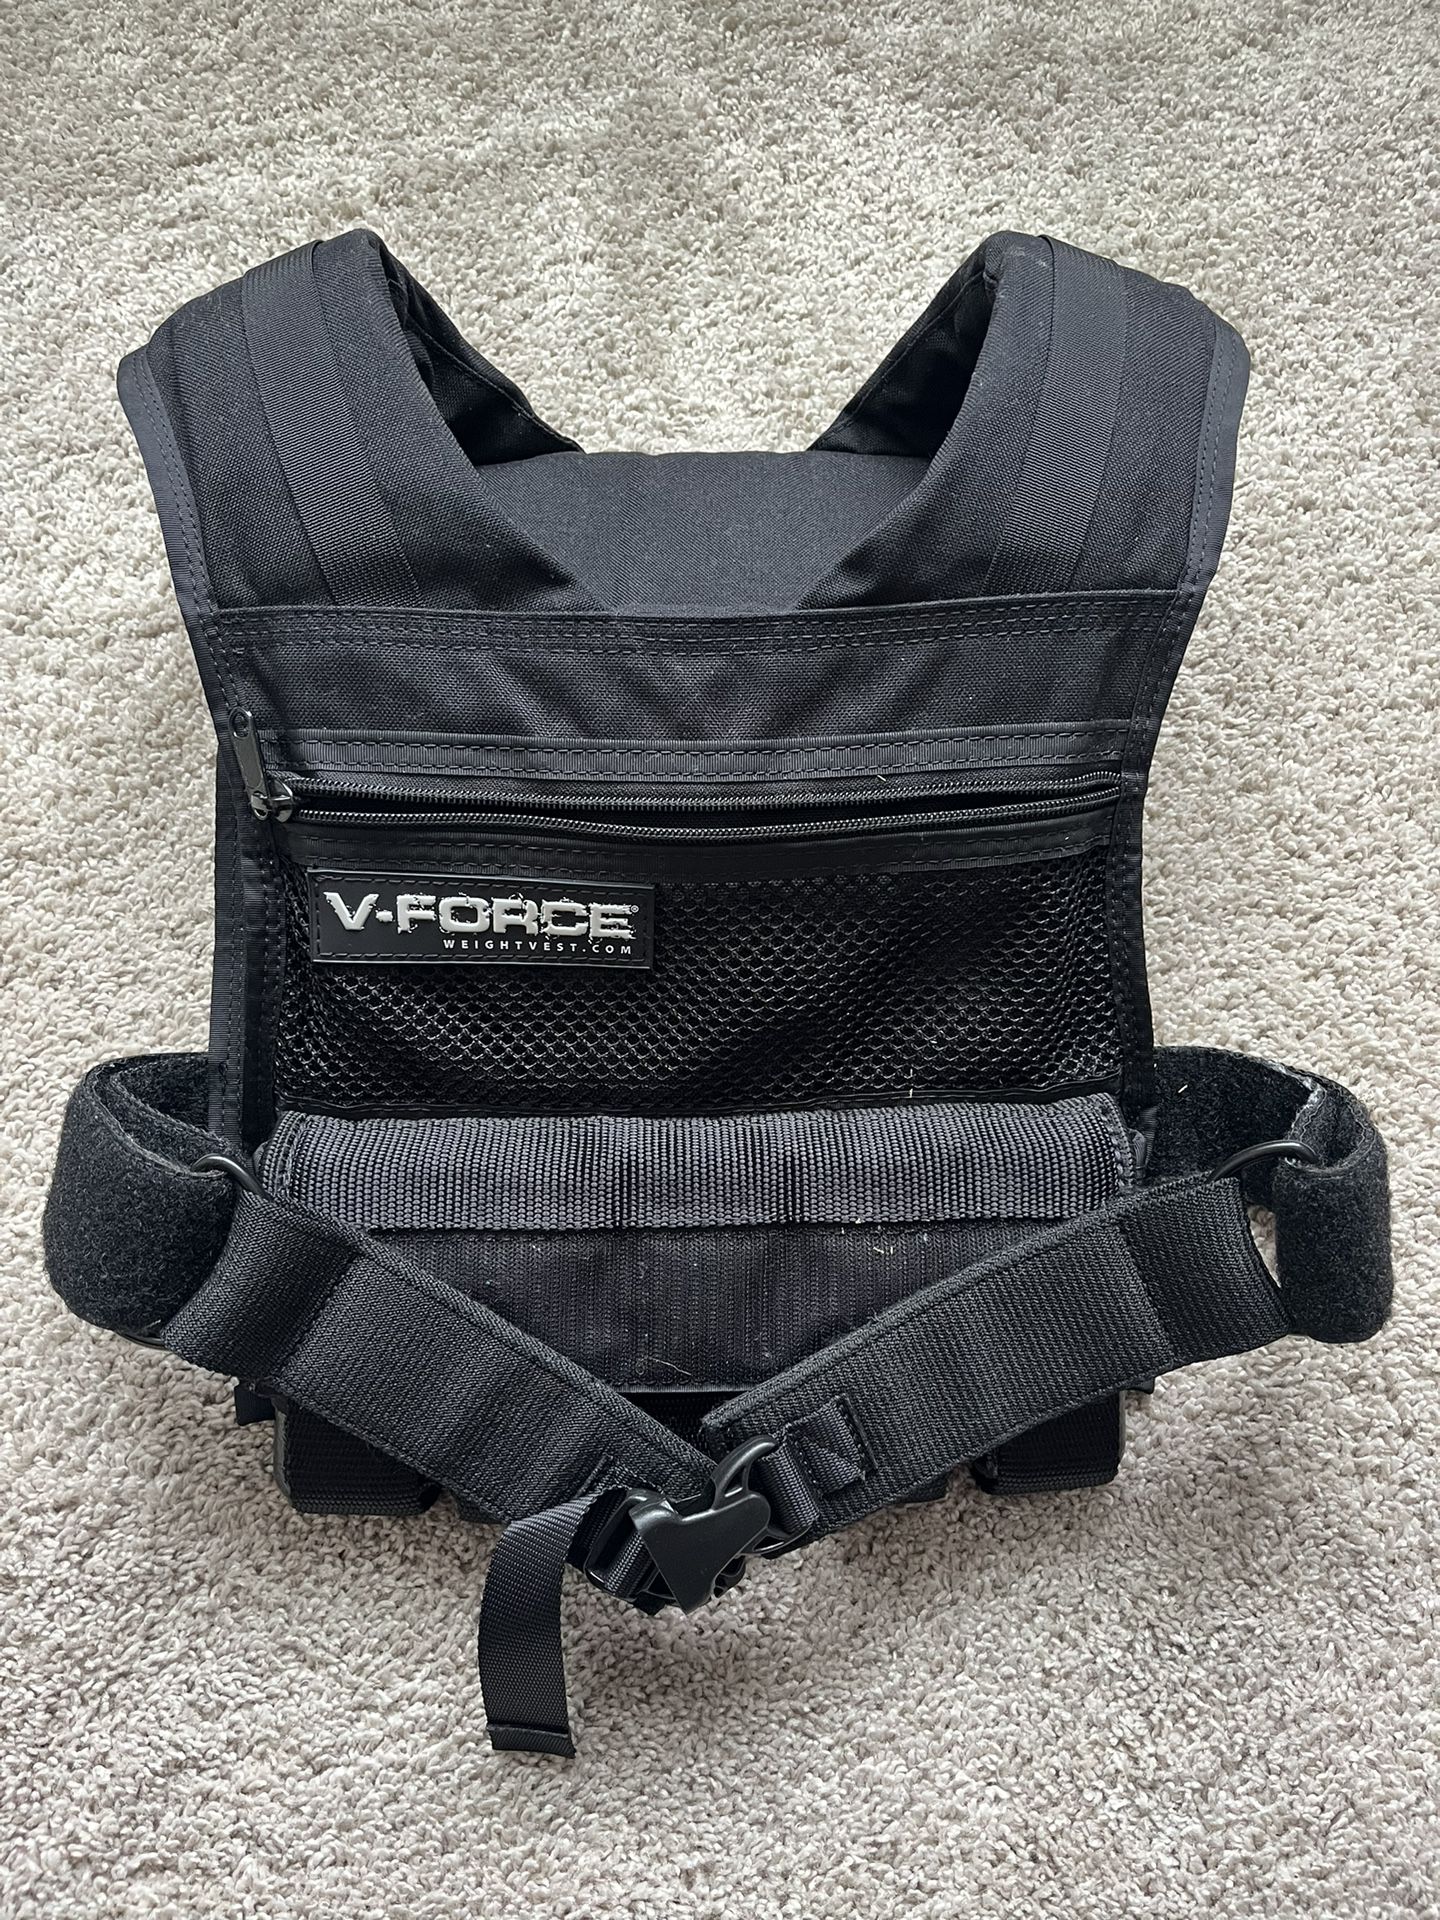 25 LB Weight Vest V-Force Rucking Walking Hiking